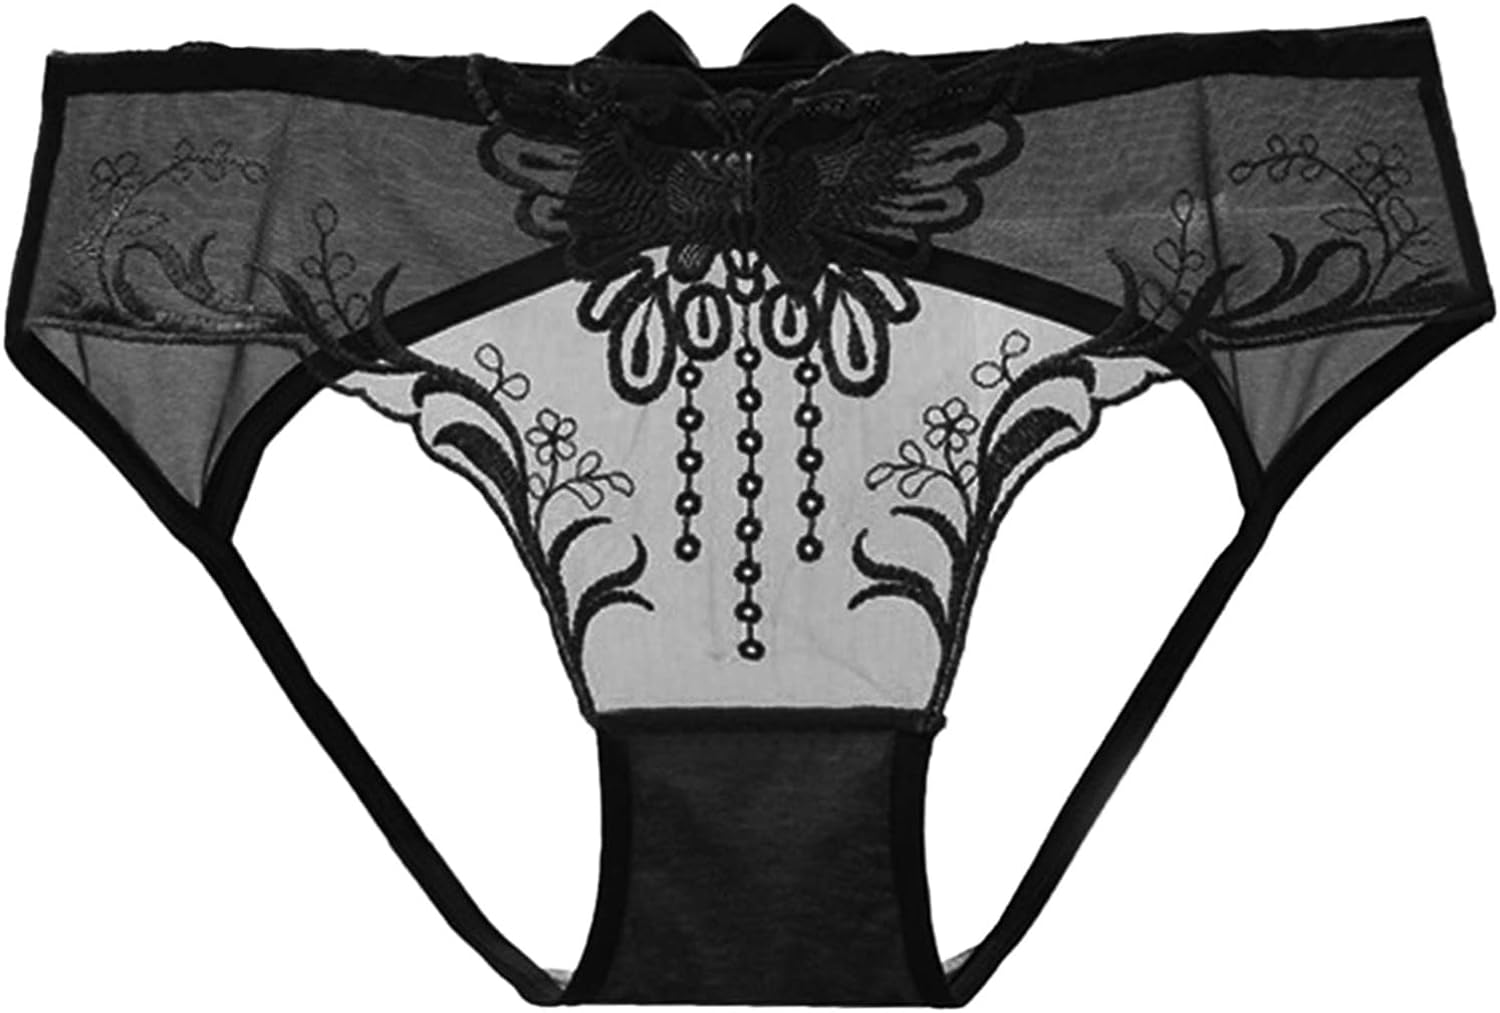 SUKIRIYA Women's lace briefs sexy panties with cage back